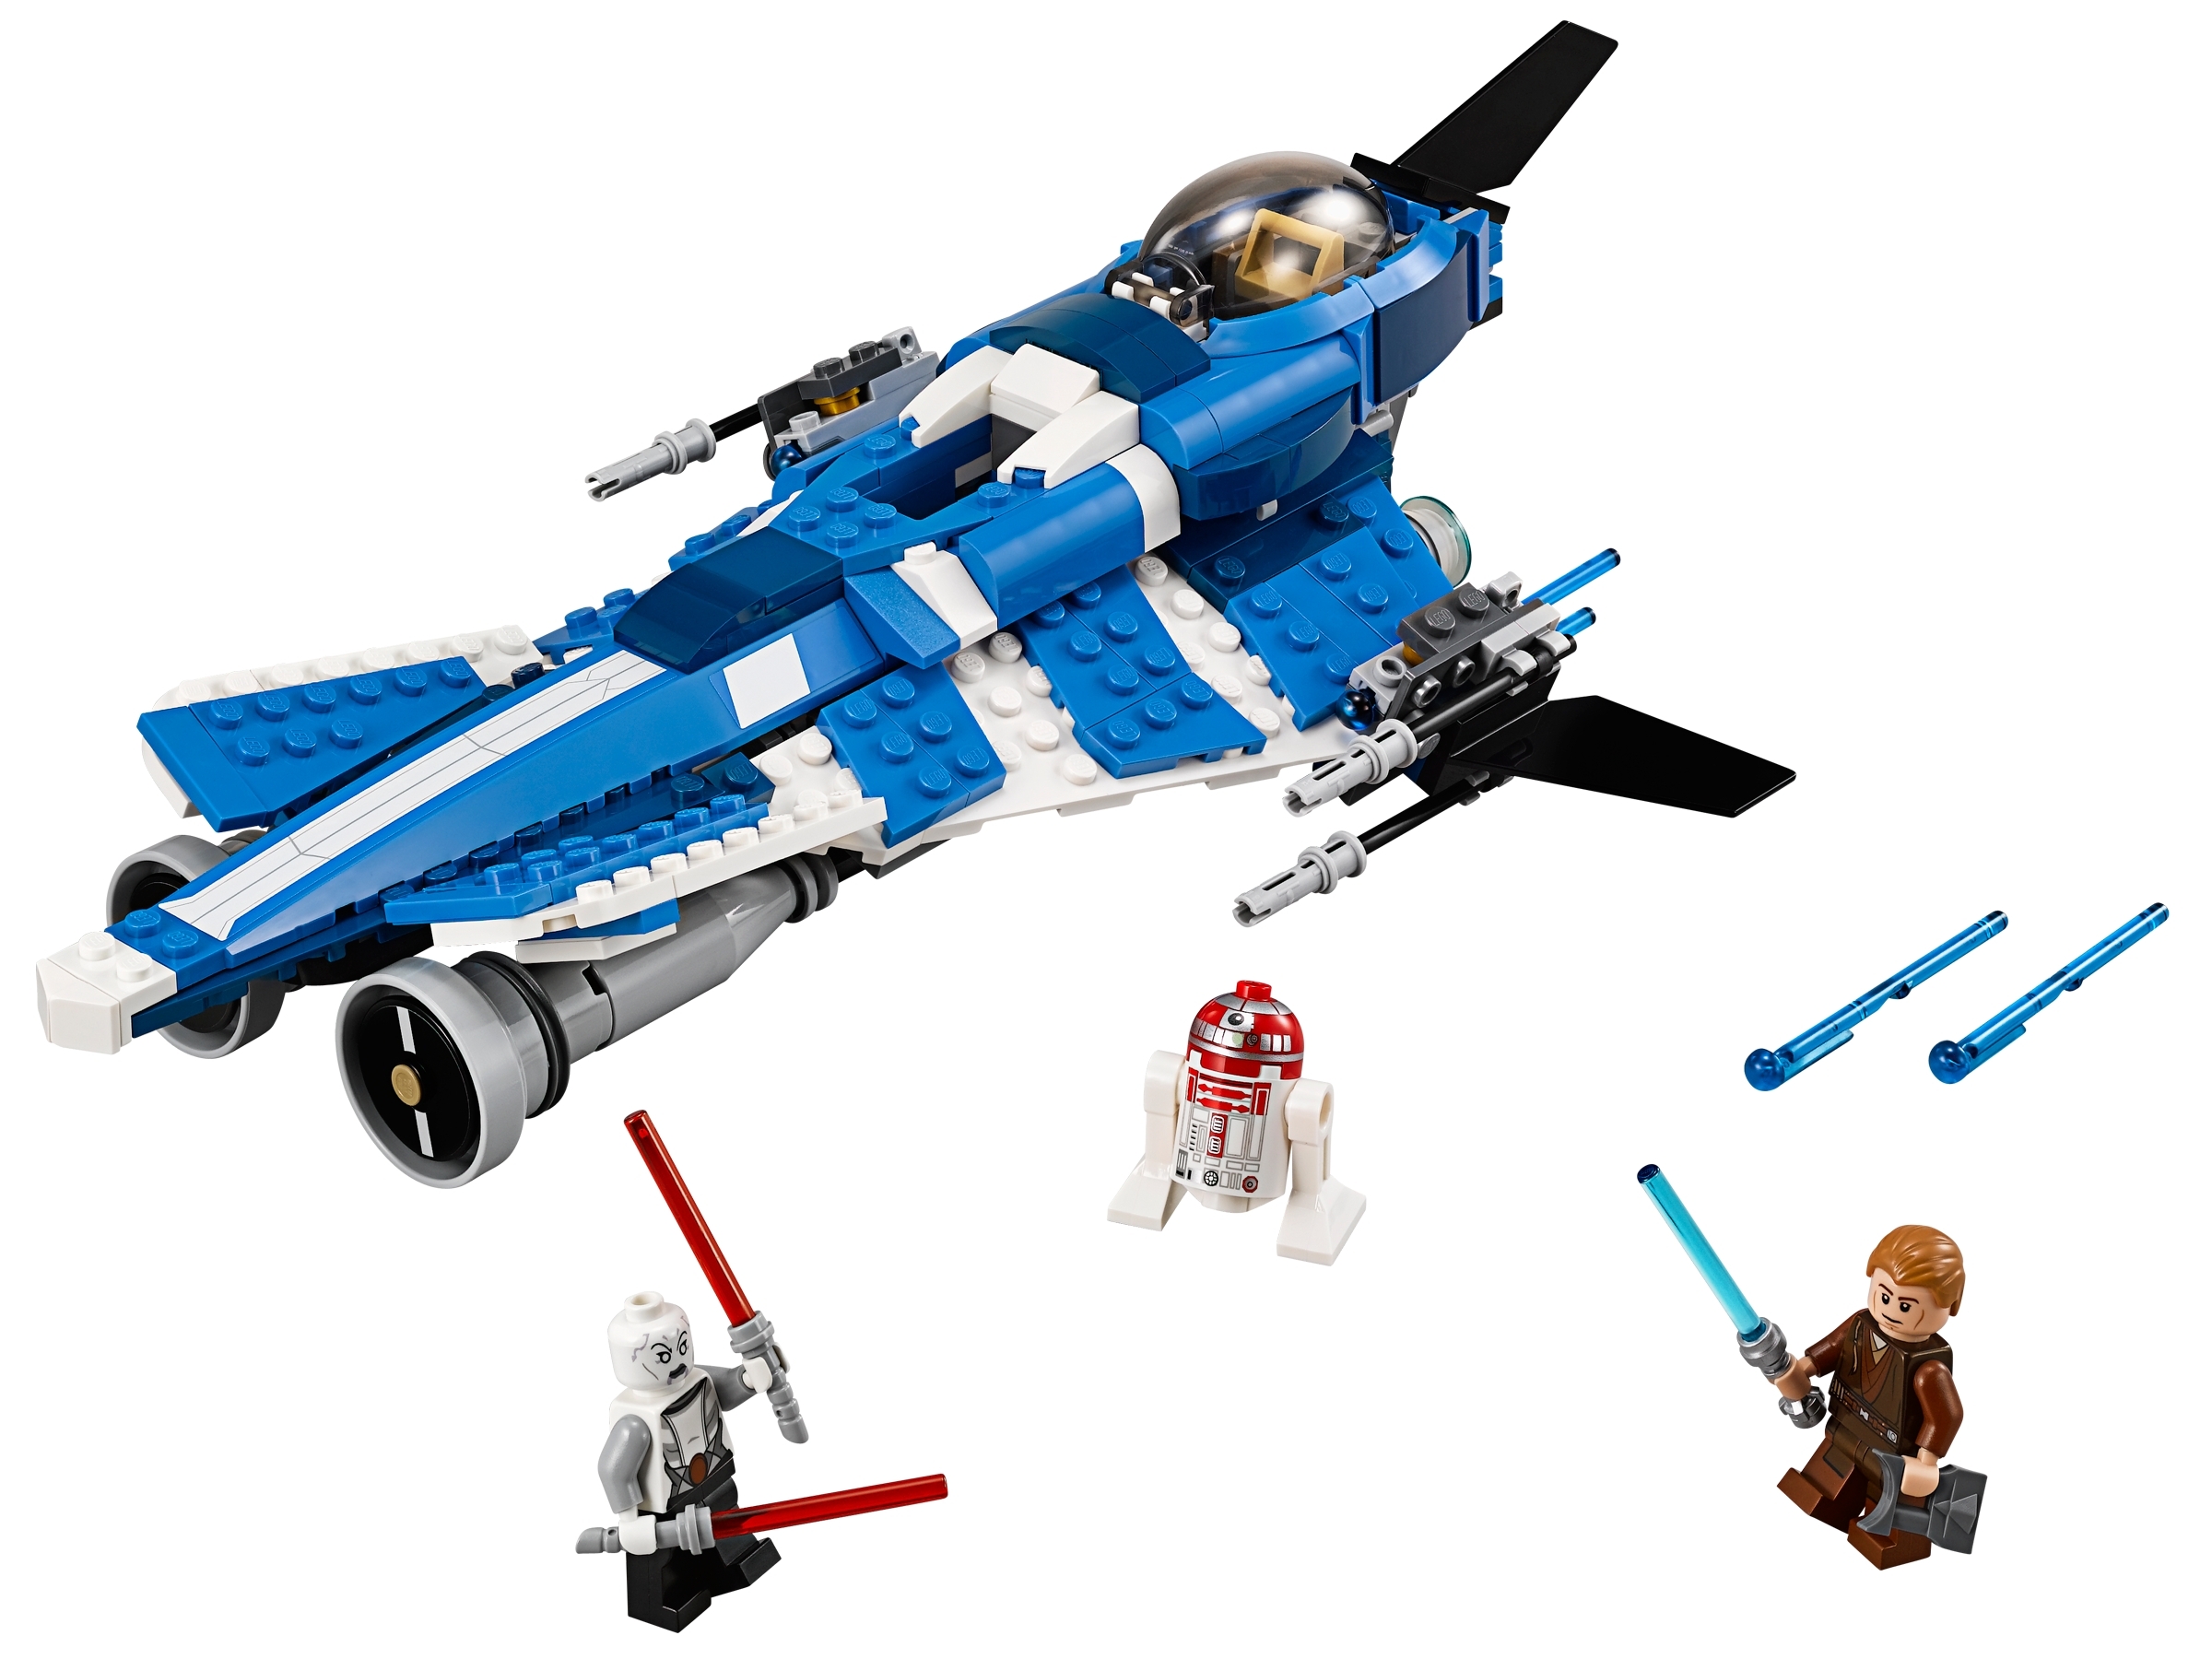 LEGO star wars Asajj Ventress Minifigure from set 75087 new